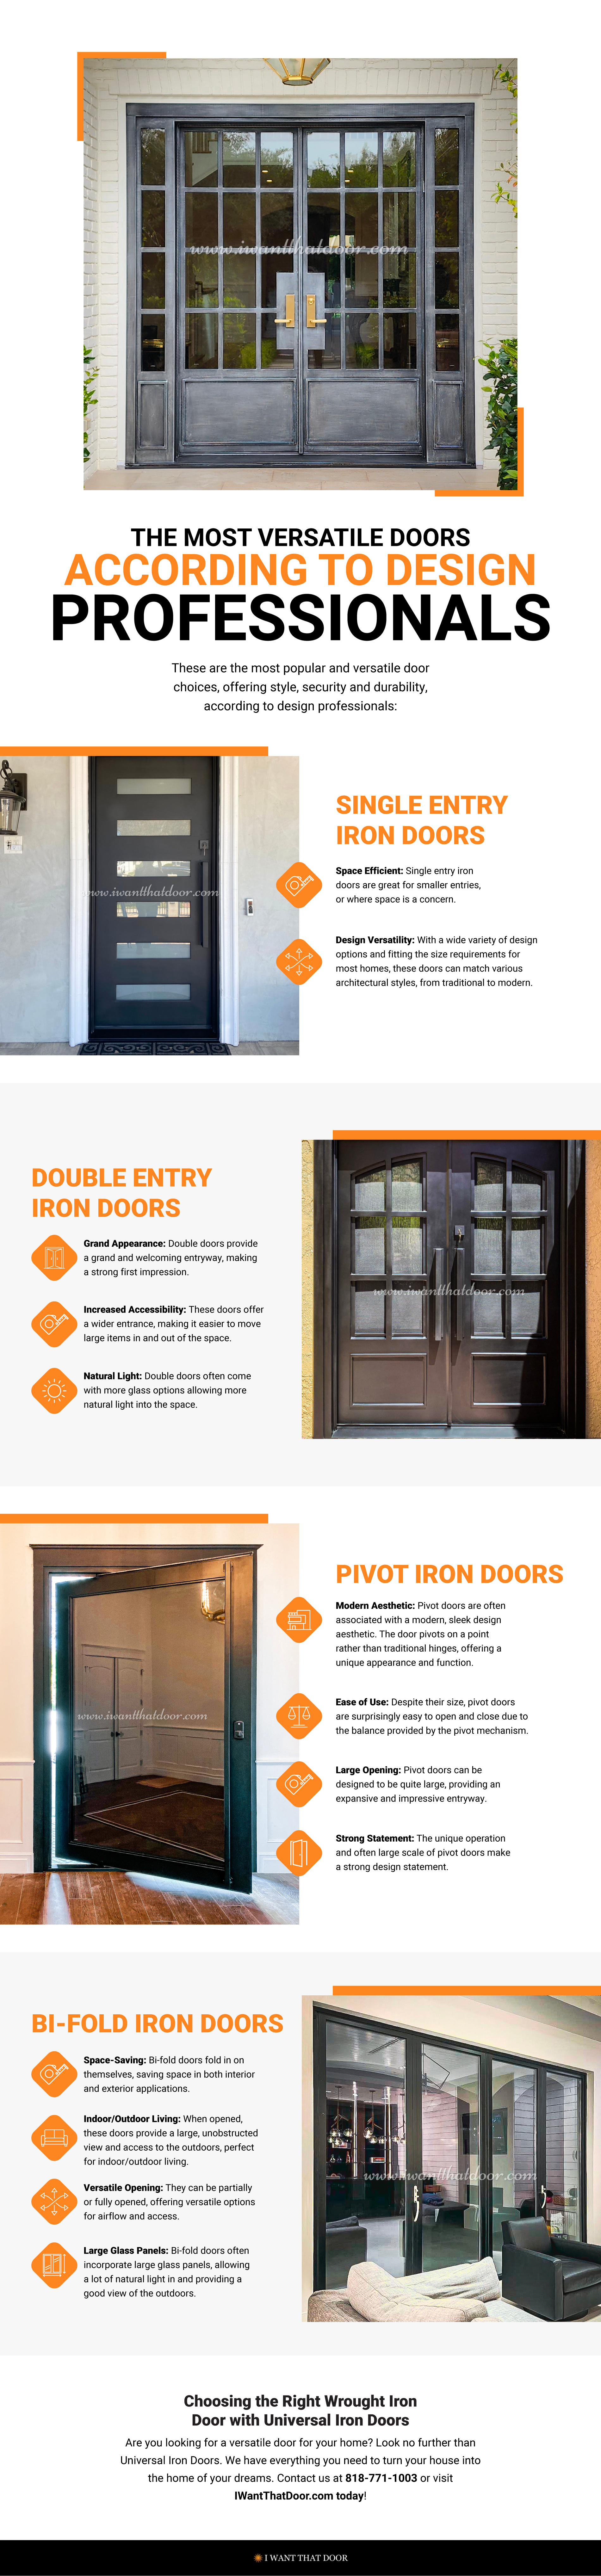 Versatile Doors According to Design Professionals Infographic